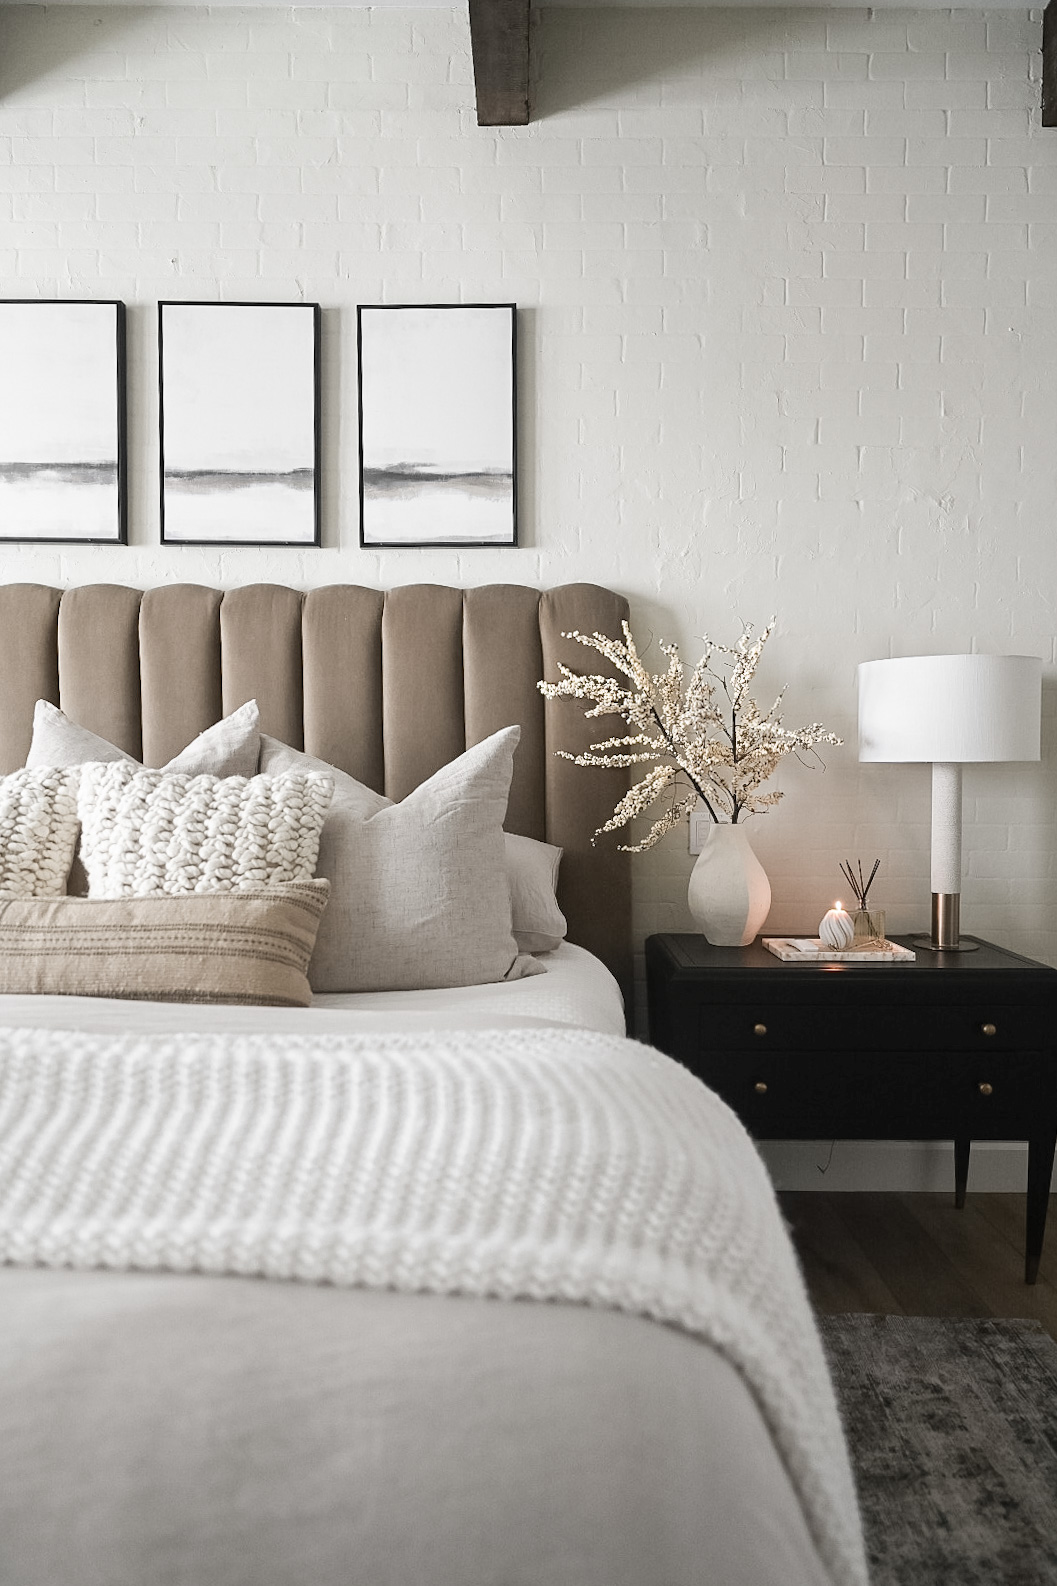 Jordyn's Latest Bedroom Refresh | Bedroom, bedroom makeover, bedroom refresh, room refresh, quilt, quilt bedding, bed frame, table lamp, throw pillow, vase, faux florals